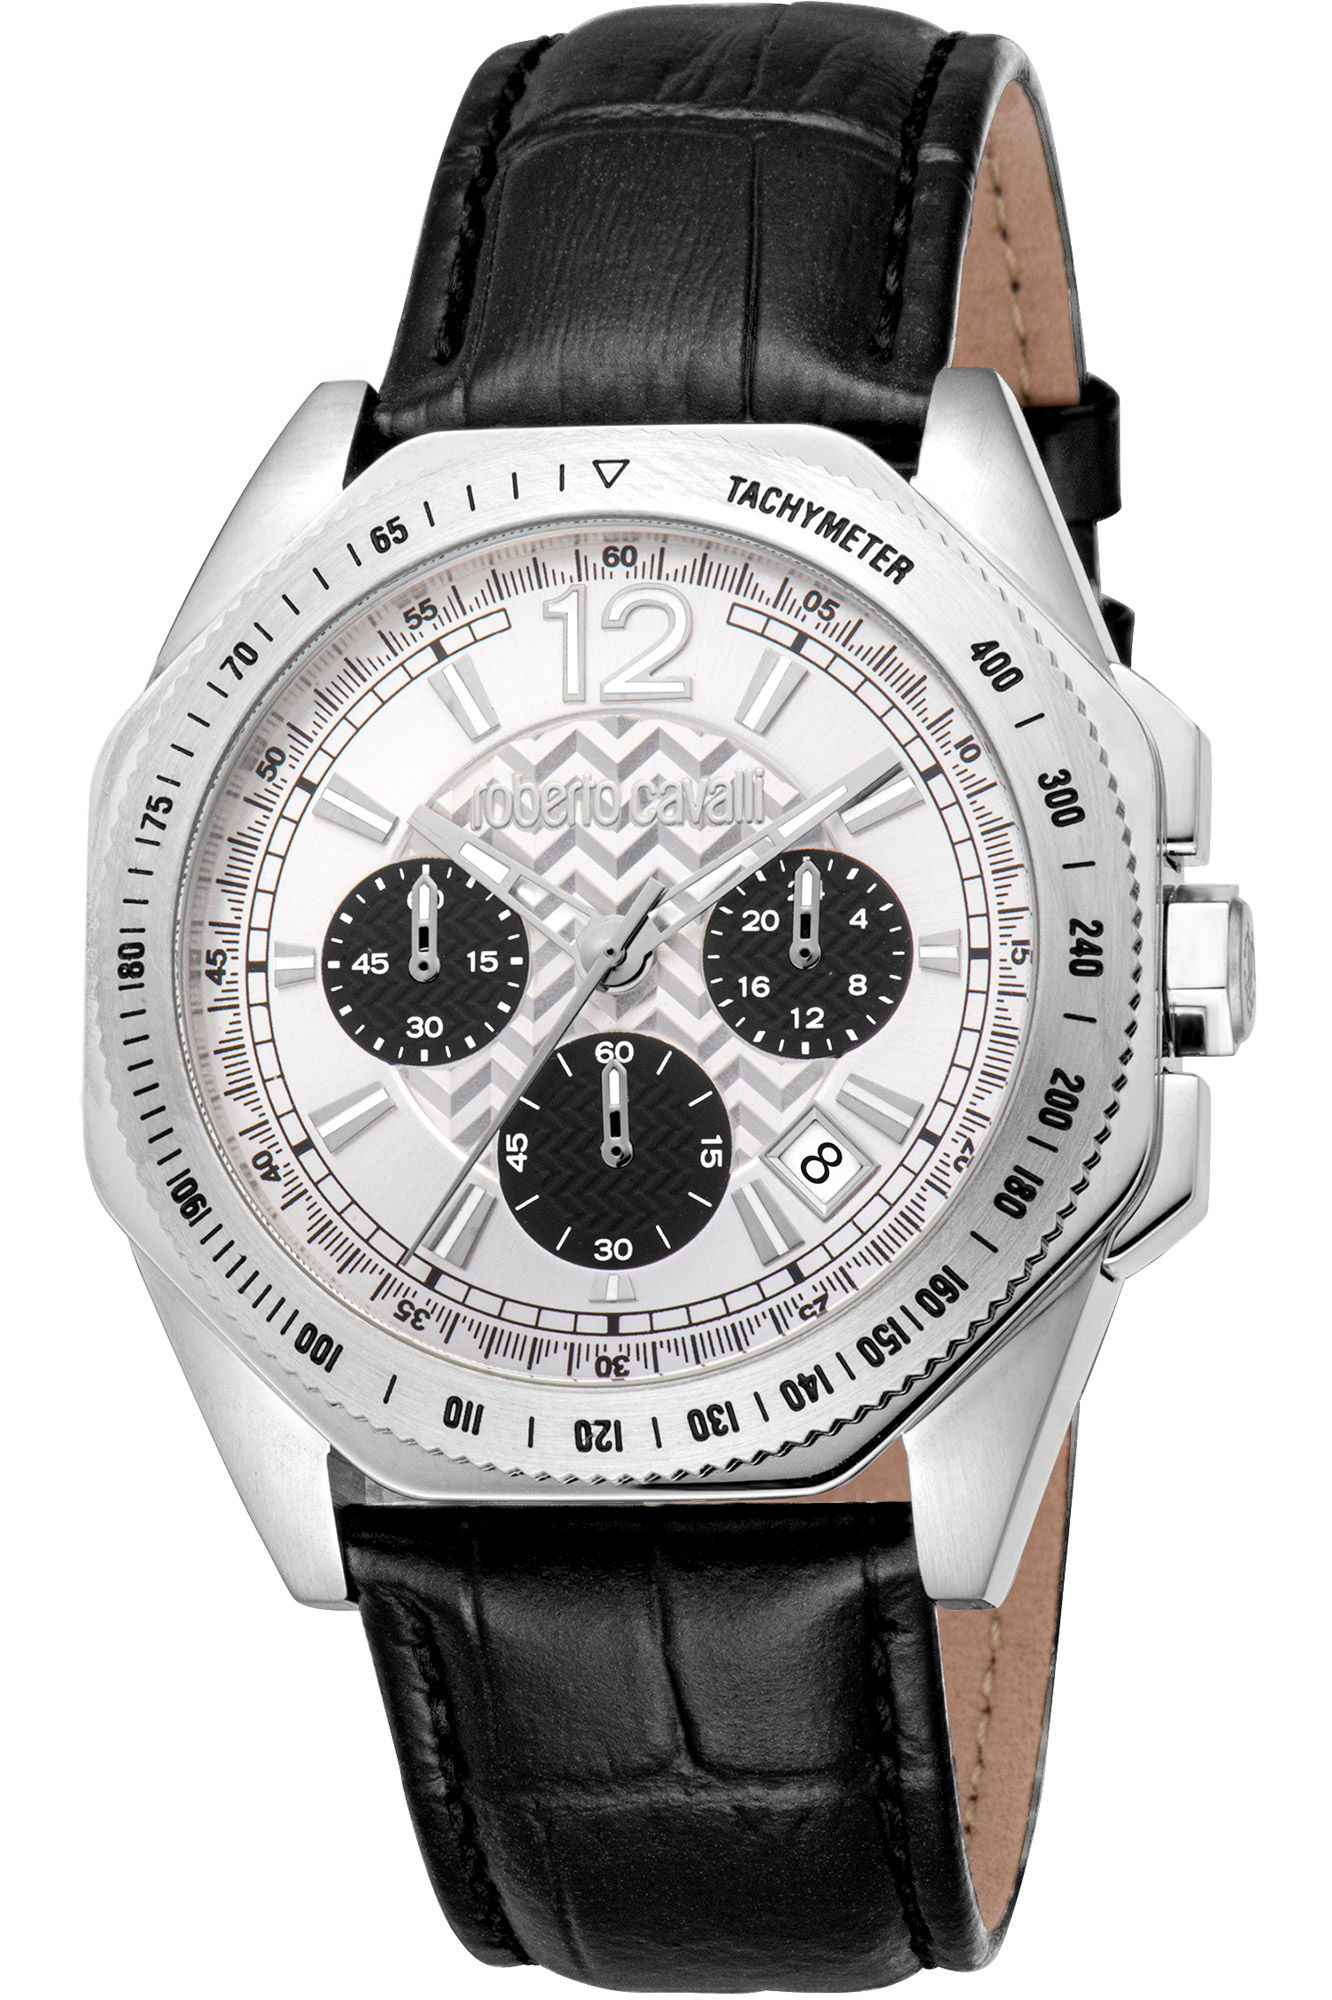 Reloj Roberto Cavalli rc5g100l0015